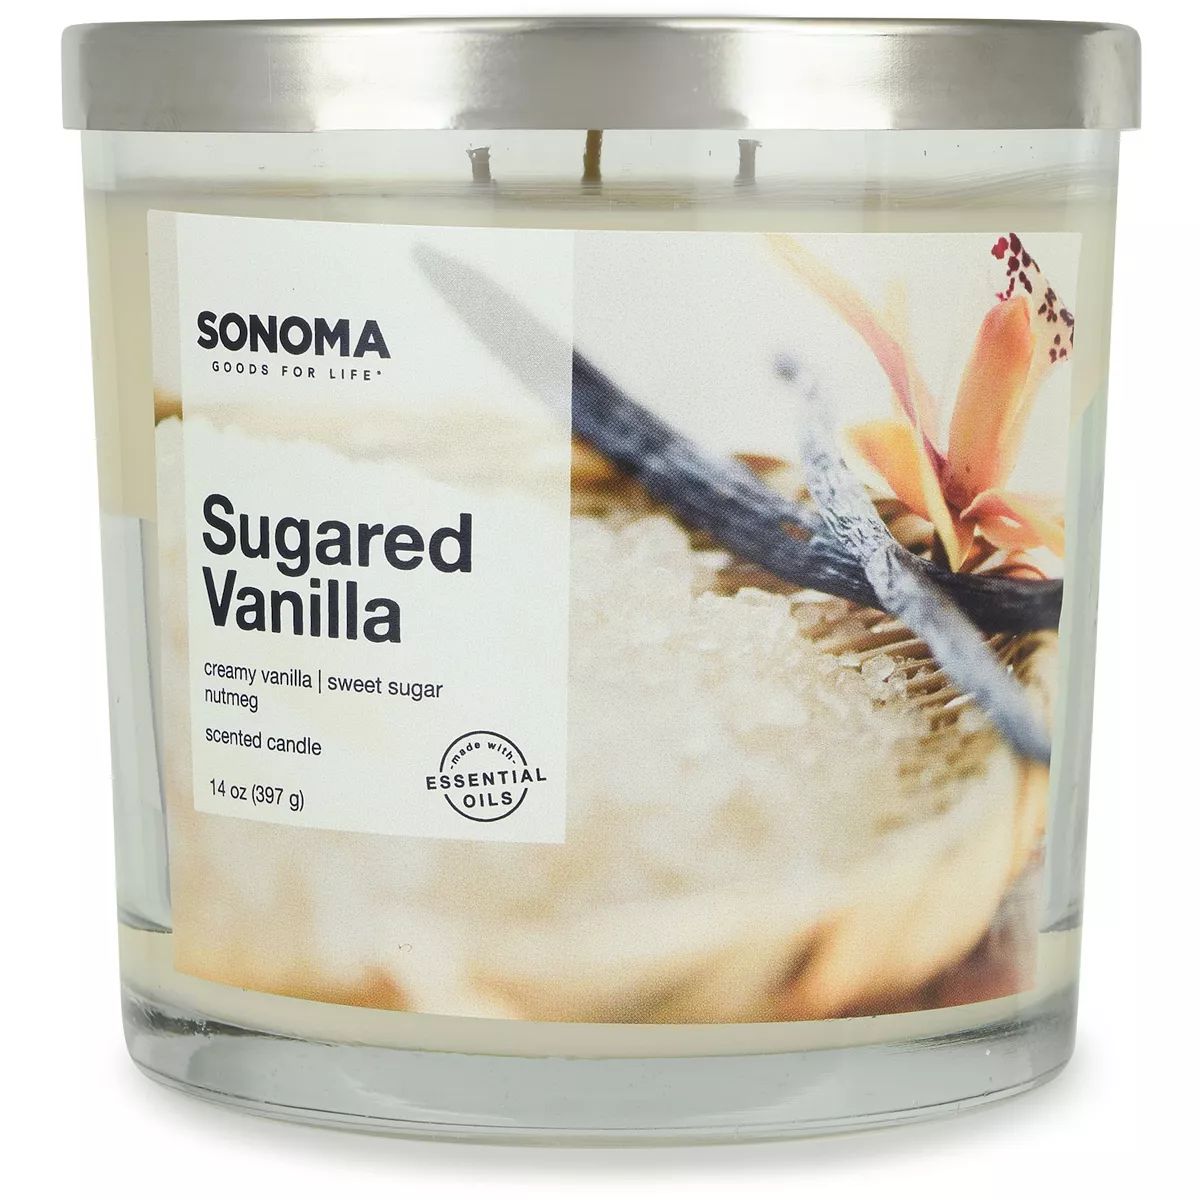 Sonoma Goods For Life® Sugared Vanilla 14-oz. Candle Jar | Kohl's